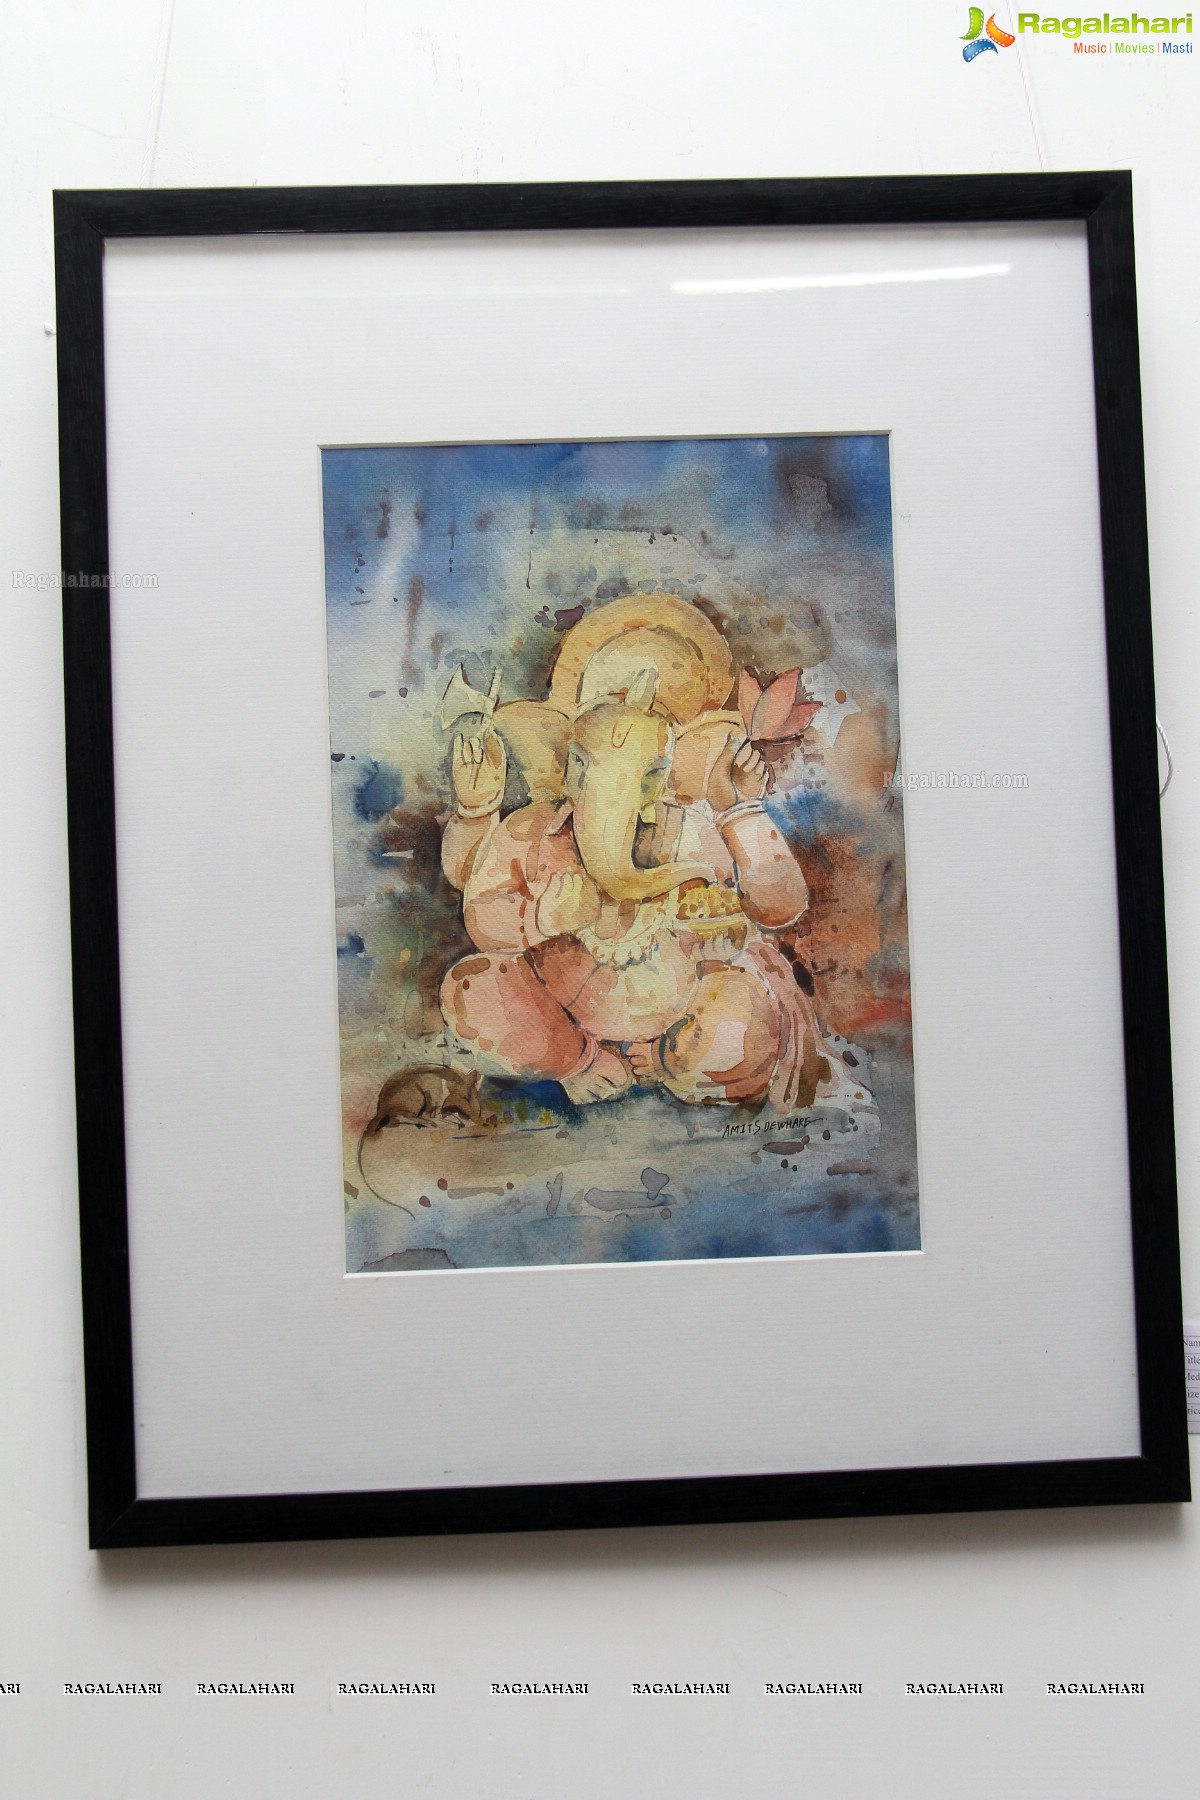 Chitramayee - 108 Ganesha Art Exhibition at State Art Gallery, Hyderabad